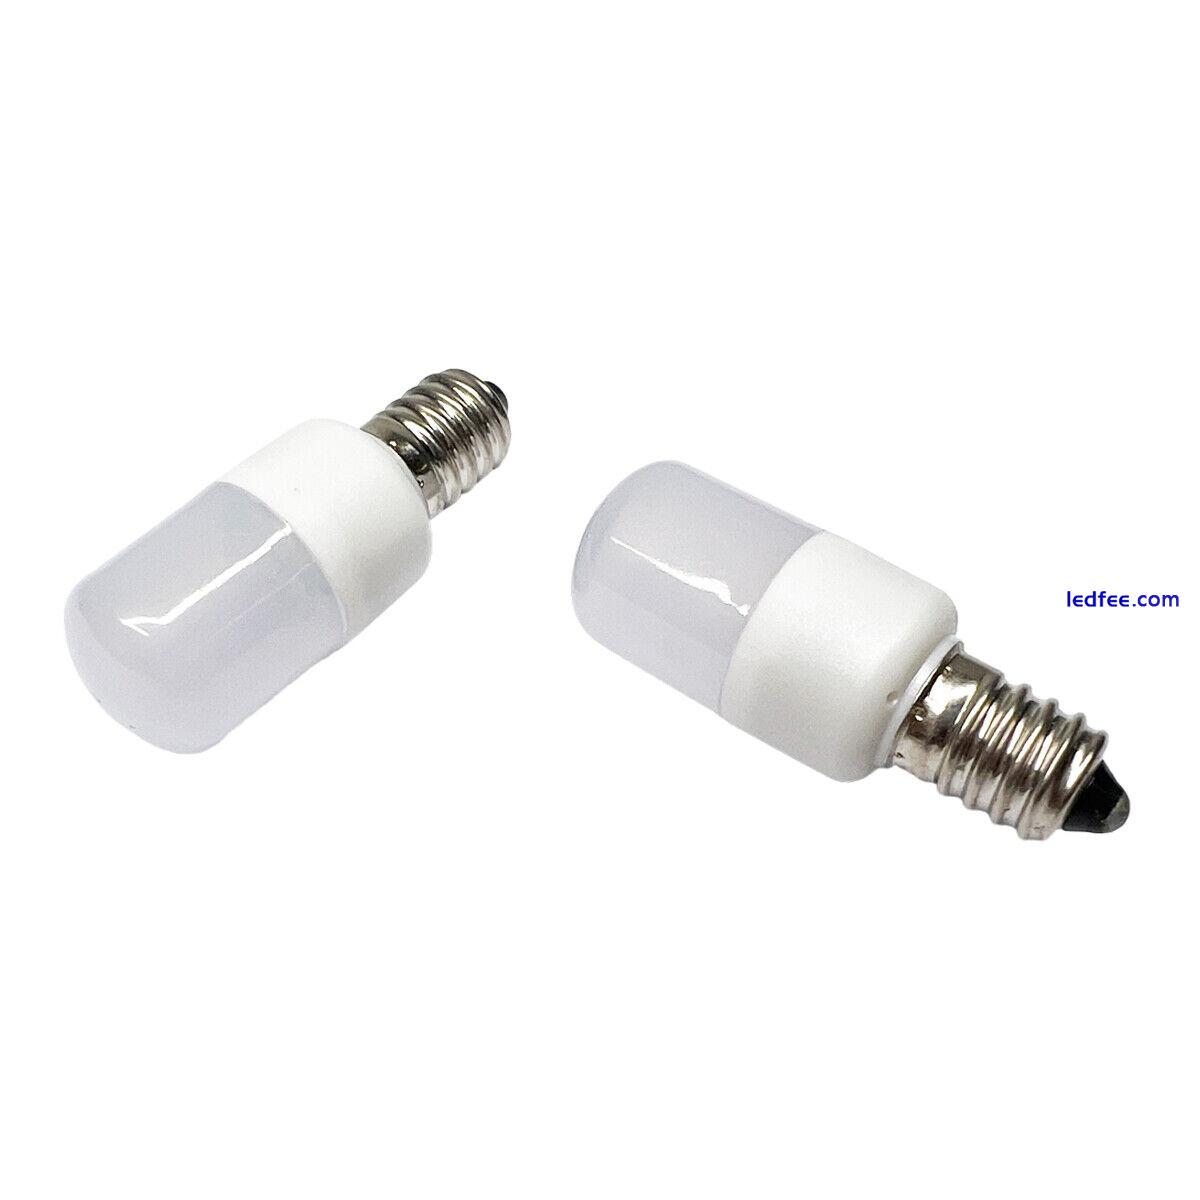 Mini E14 LED Light Bulb 1.5W SMD T22 White Lamps For Refrigerator Freezer 220V 2 